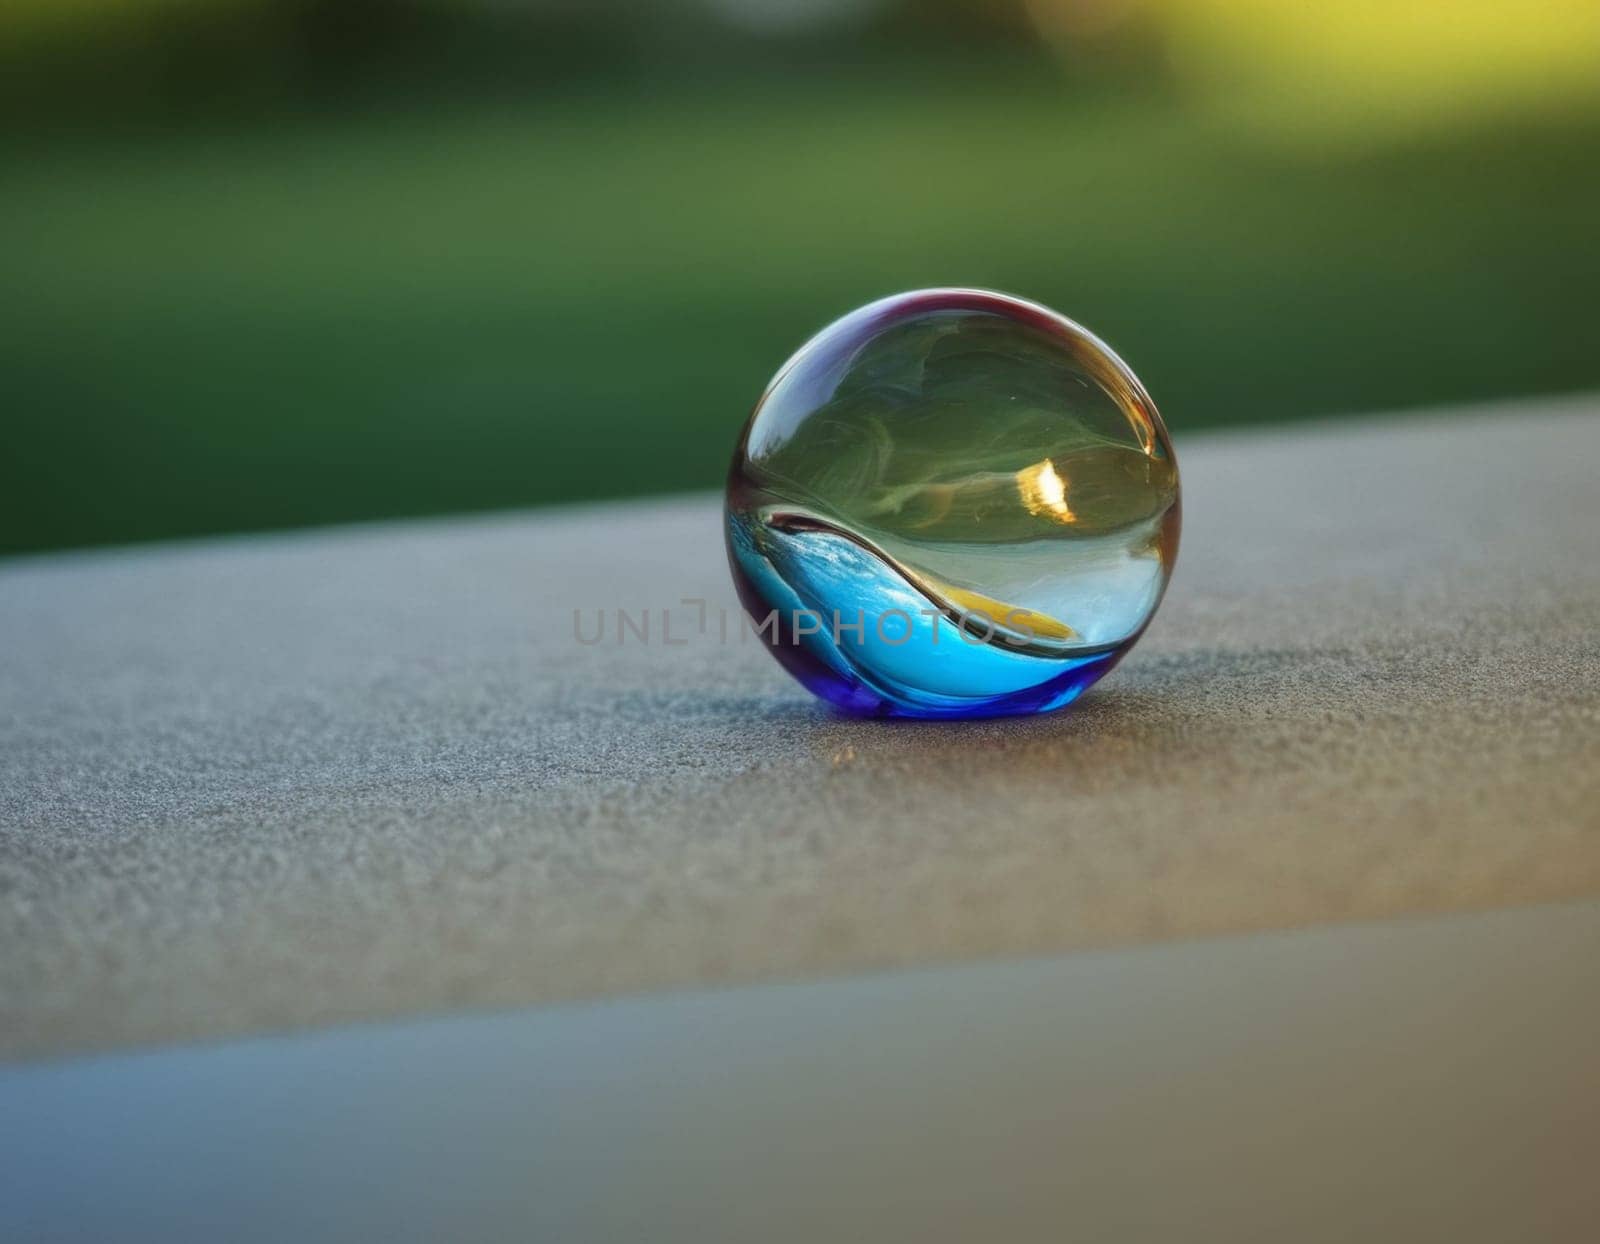 Image of a drop of liquid glass. AI generation